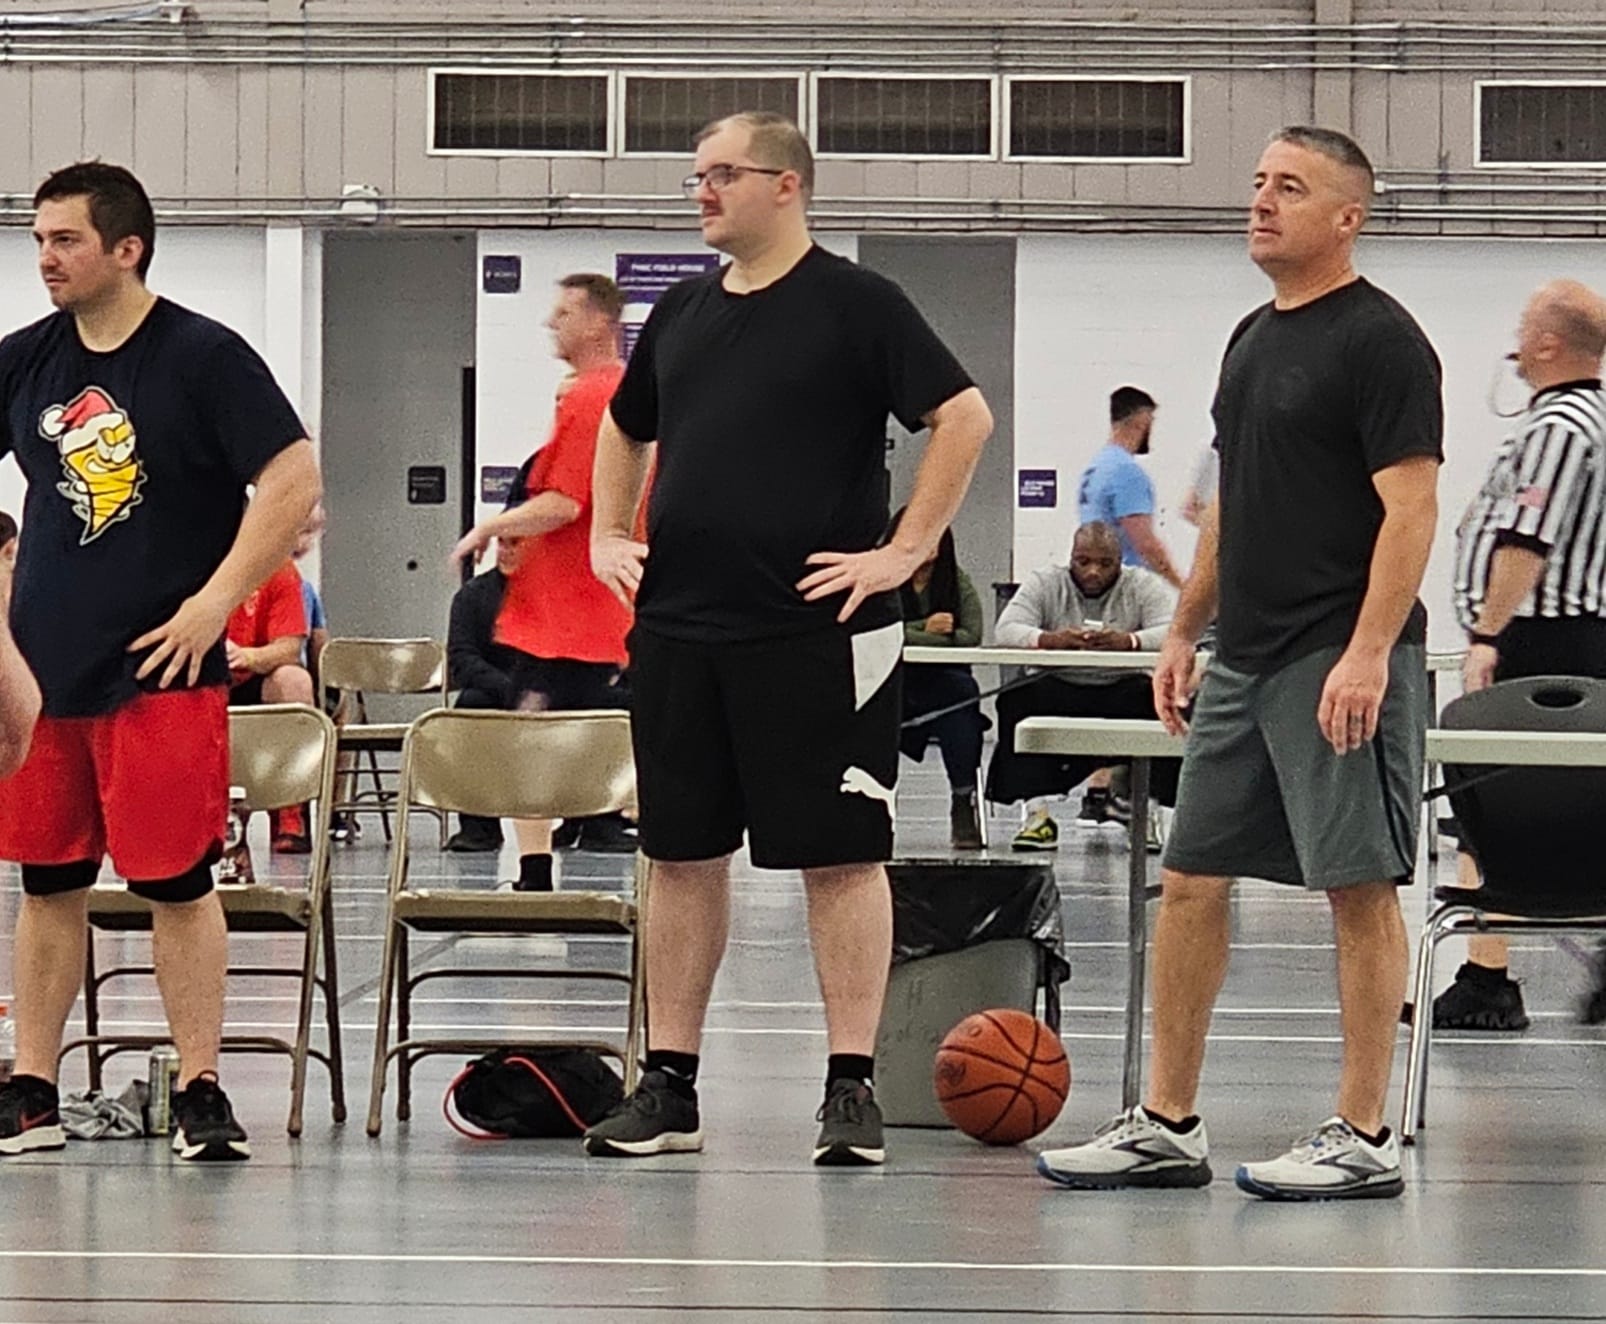 men on a basketball court